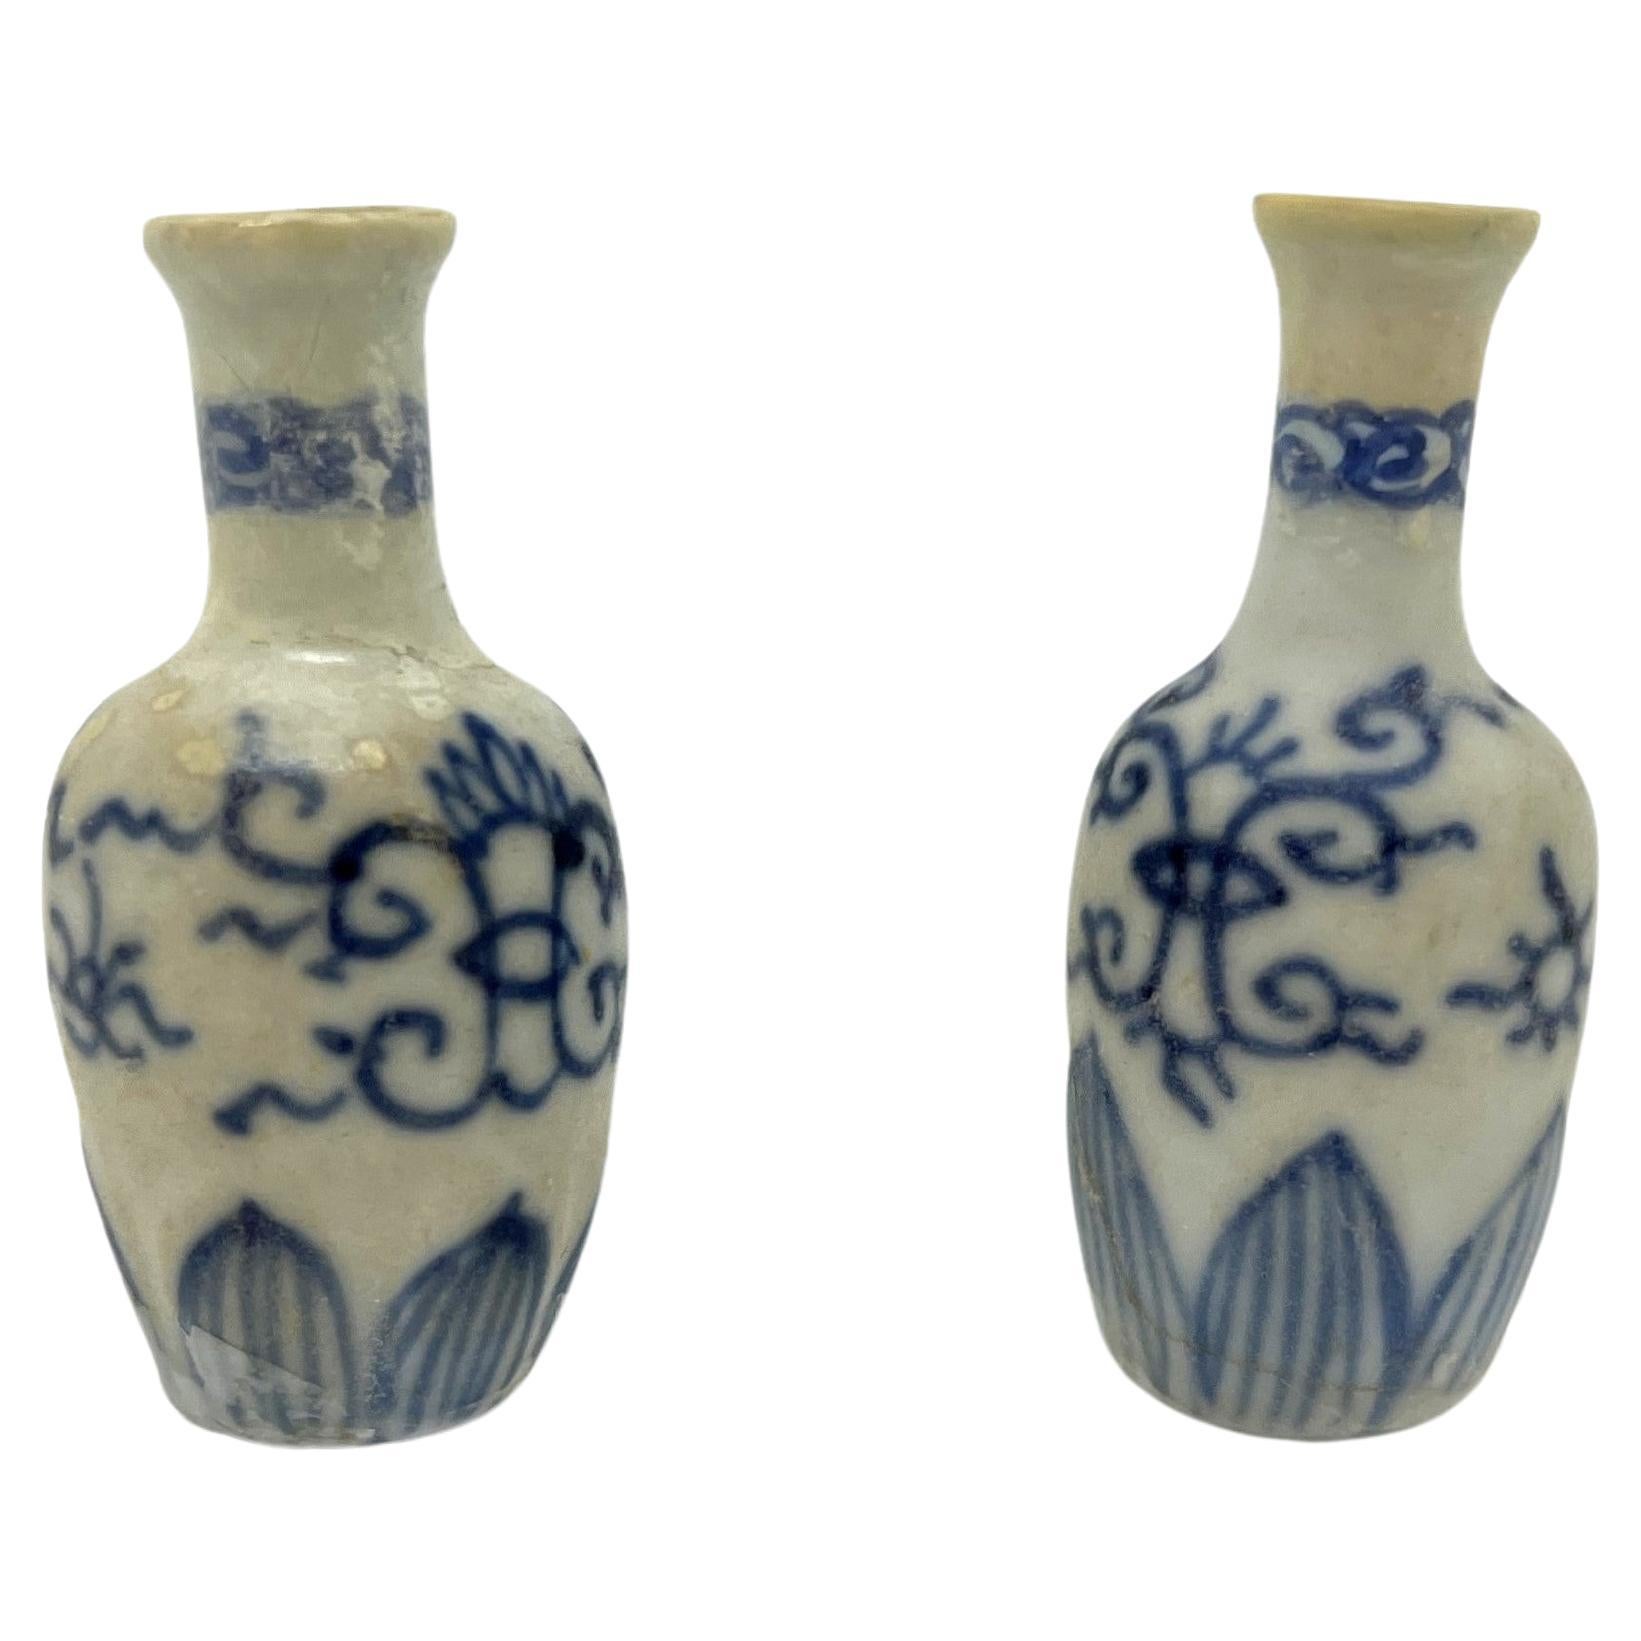 Zwei blau-weiße Miniatur-Vasen, 1725, Qing Dynastie, Yongzheng-Ära